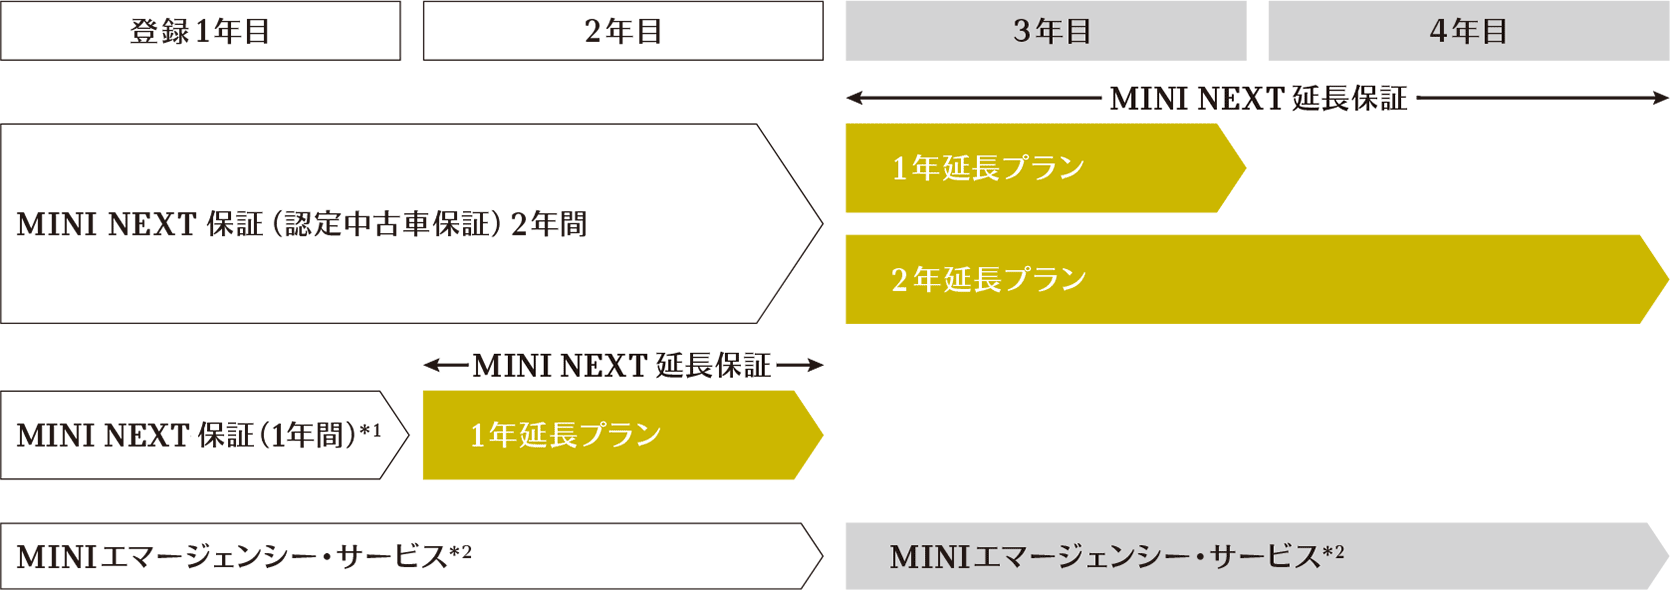 MINI 延長保証 | ファイナンシャル・サービス | MINI Japan